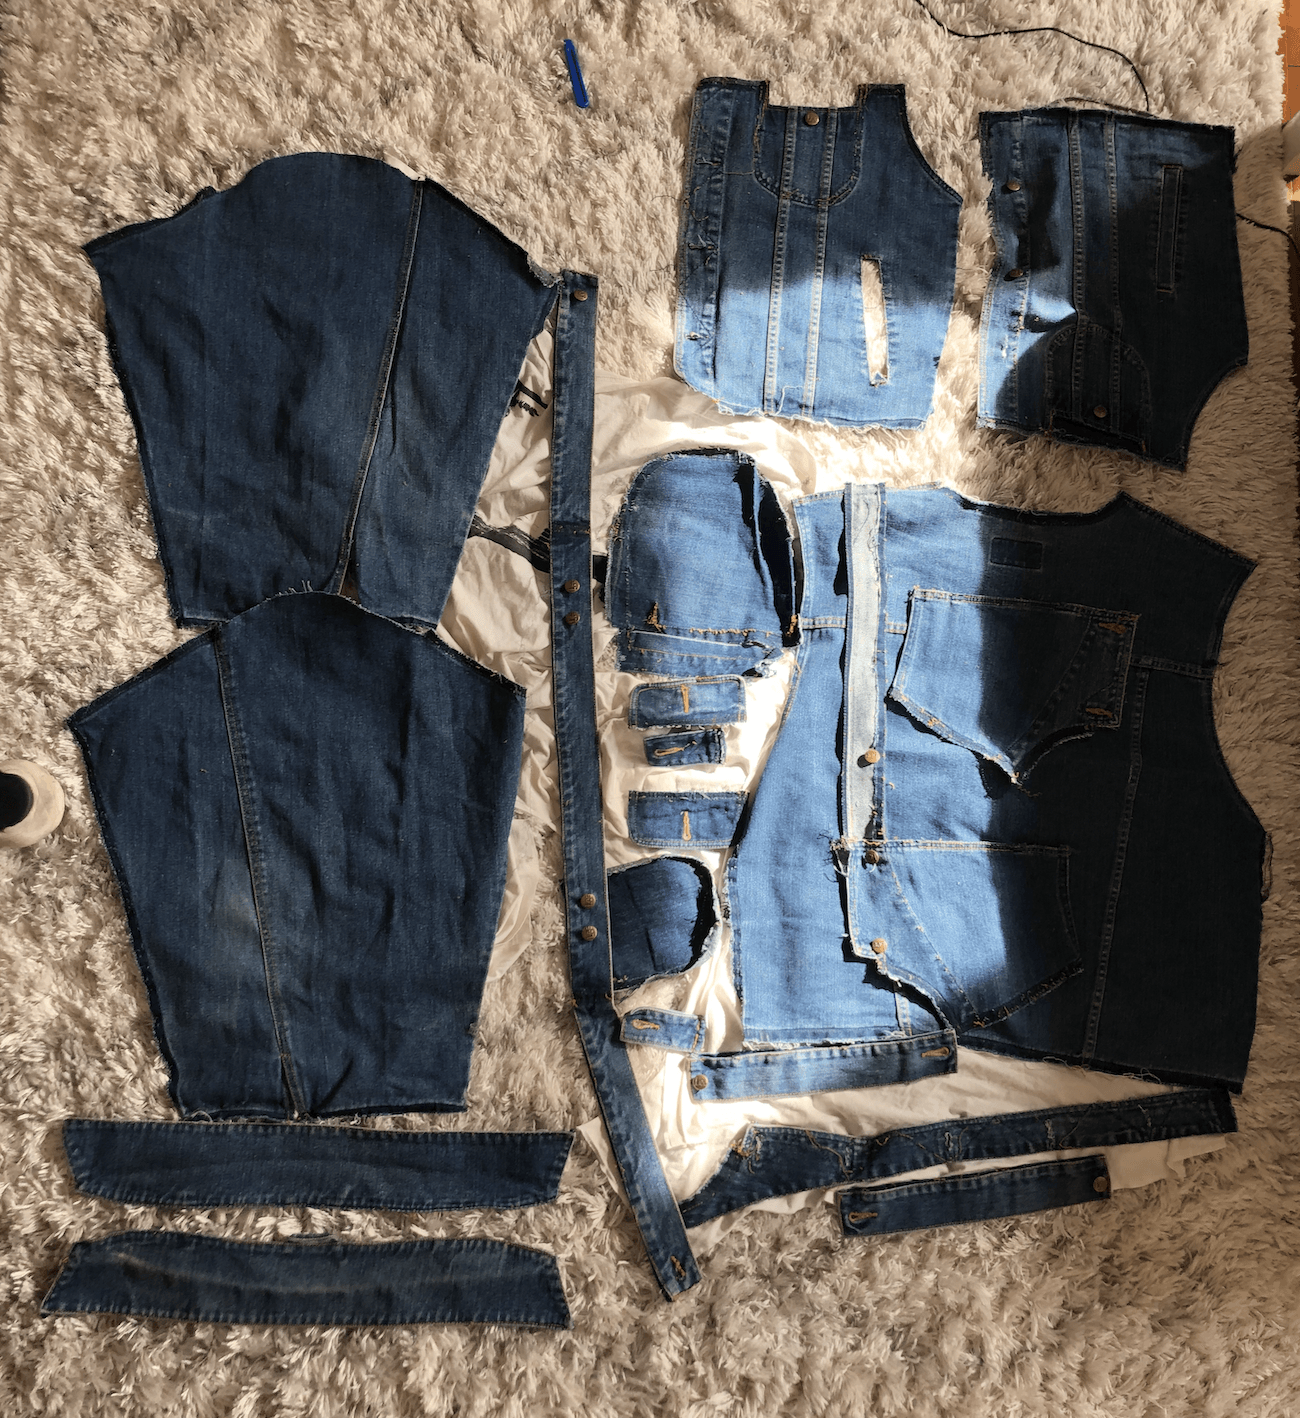 Garment Documentation and Deconstruction